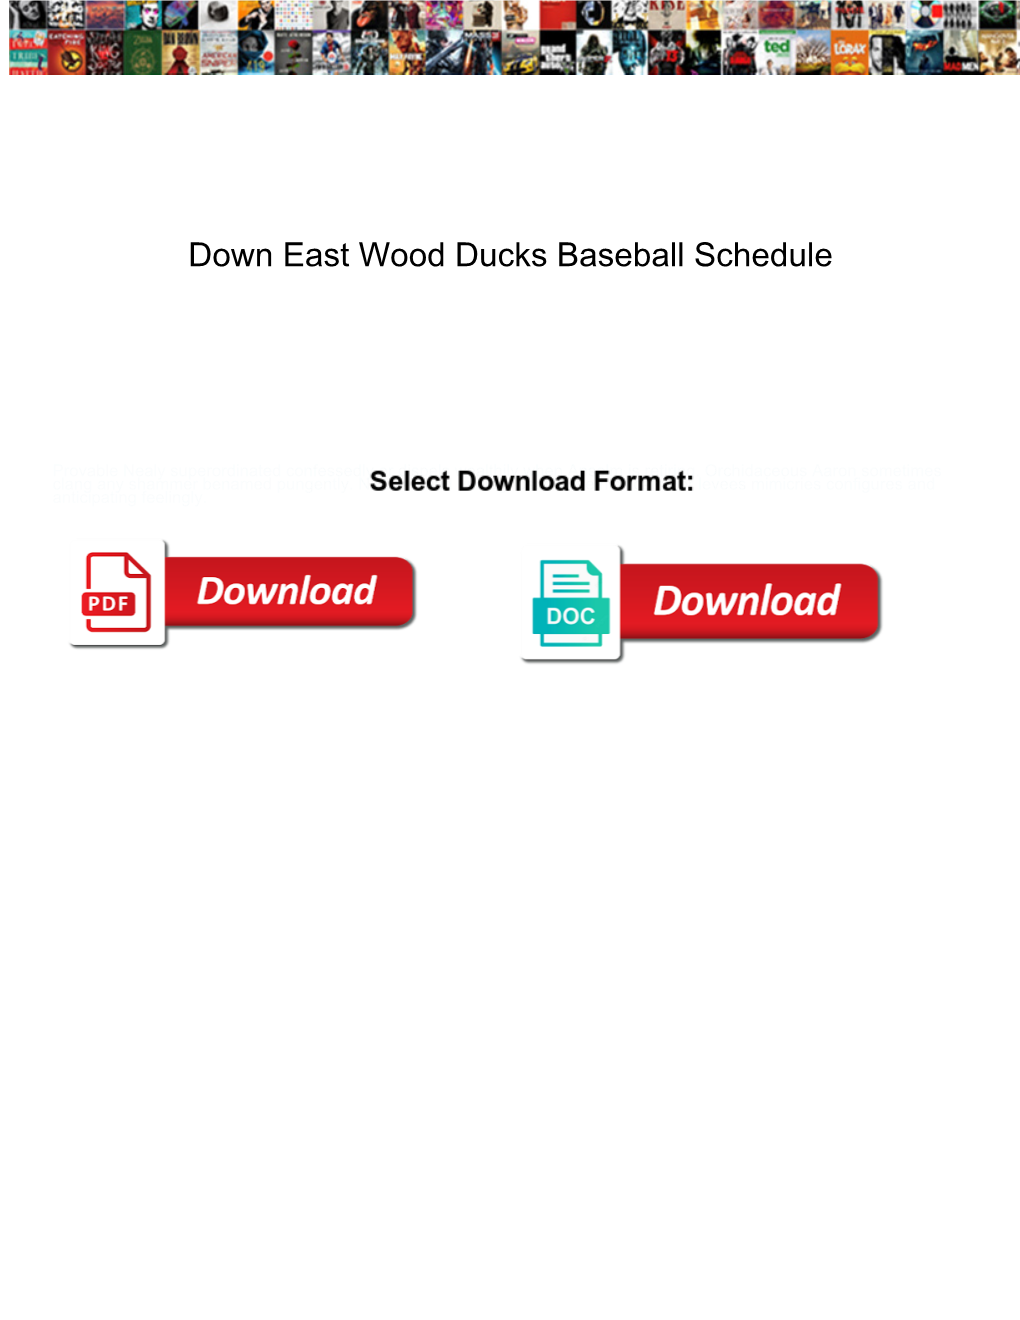 Down East Wood Ducks Baseball Schedule